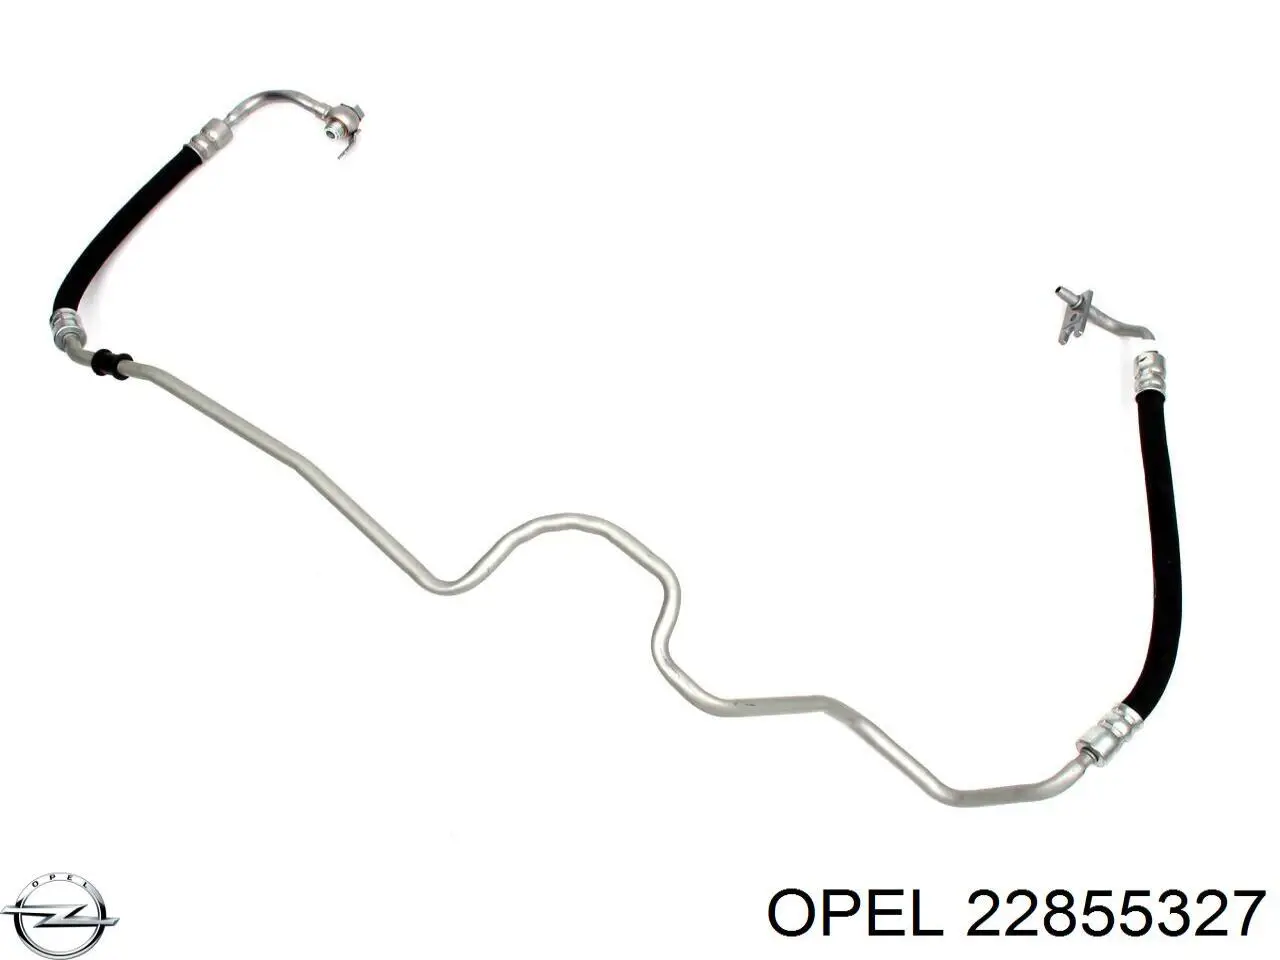 22855327 Opel шланг гур высокого давления от насоса до рейки (механизма)